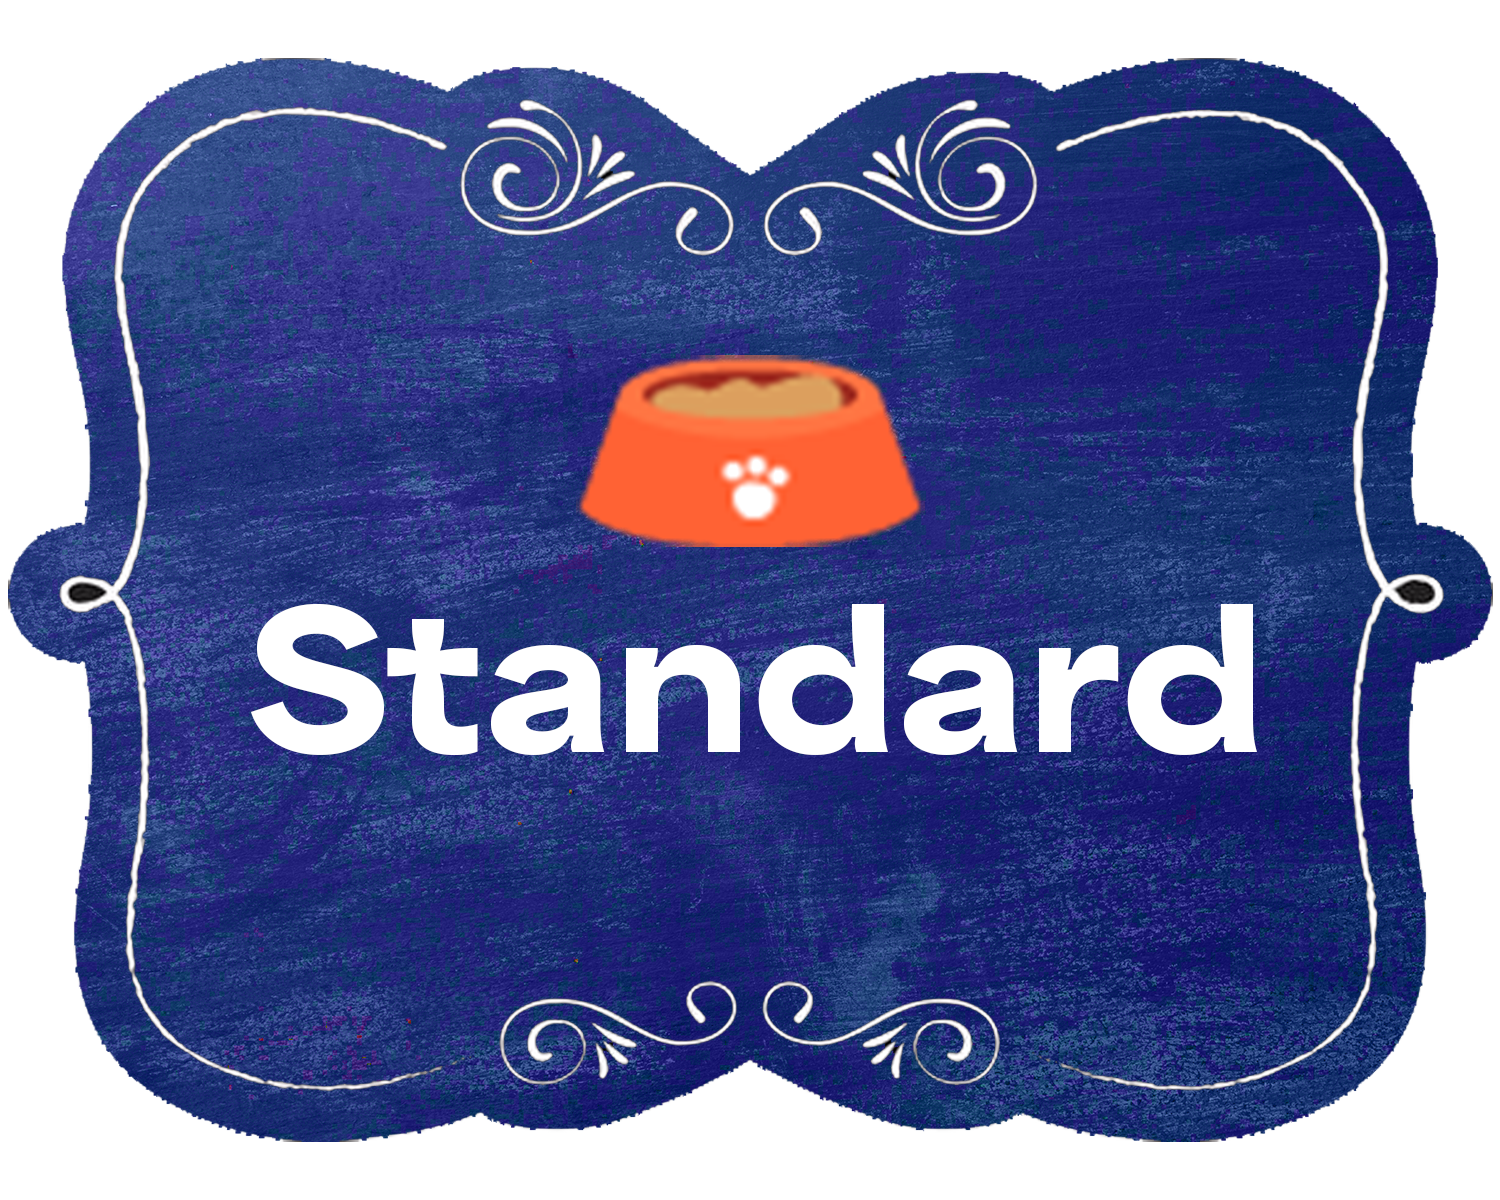 Standard Range